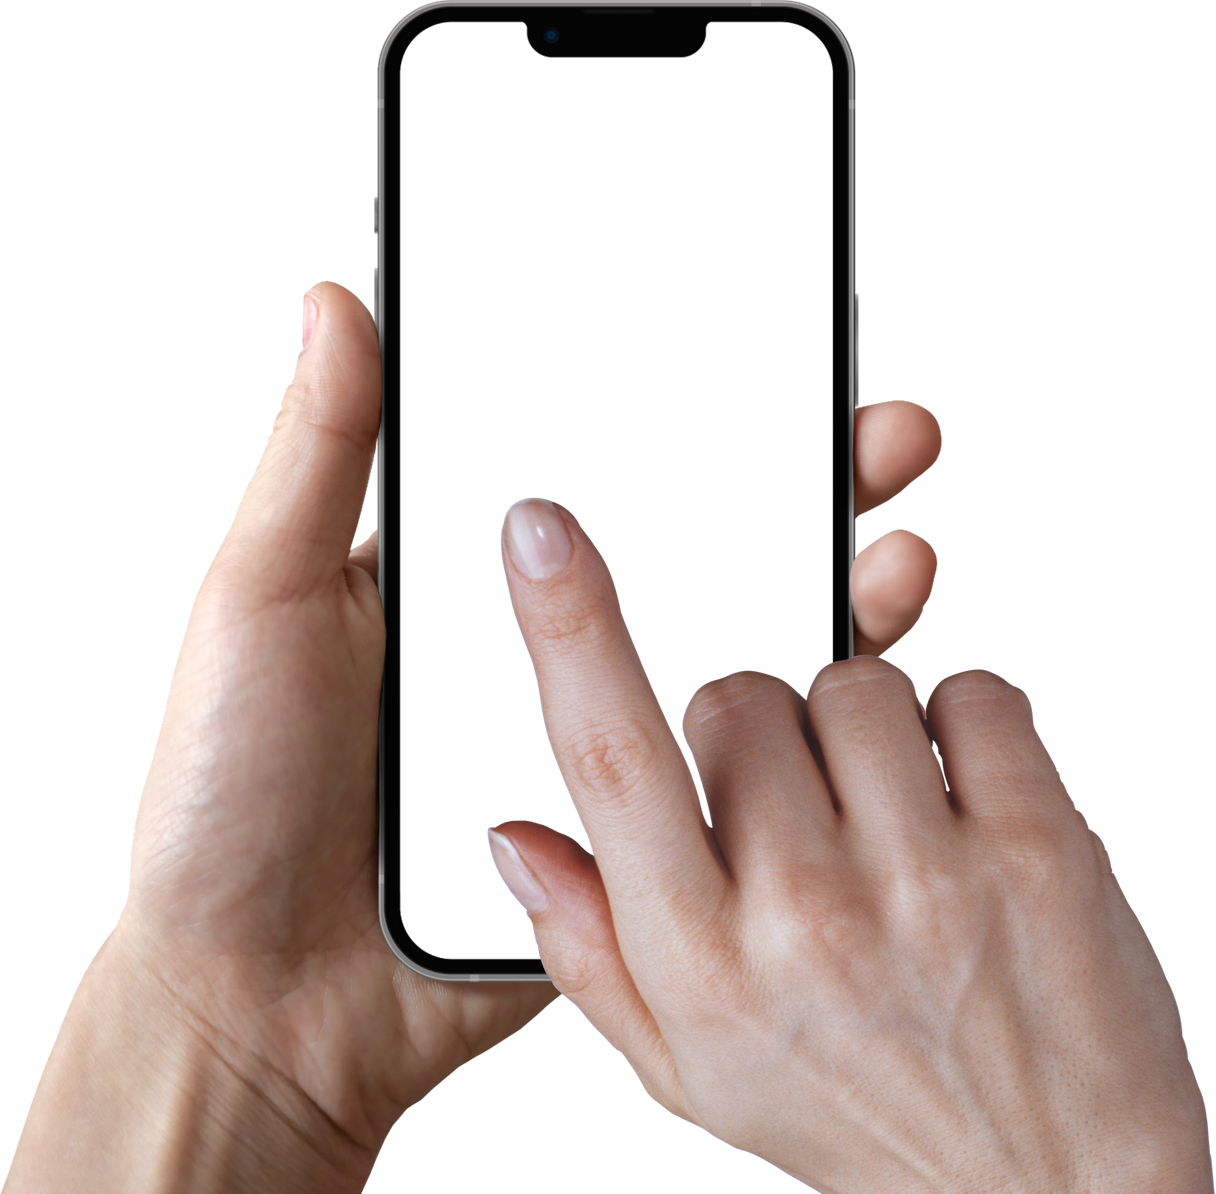 Hand Touching a Smartphone Screen